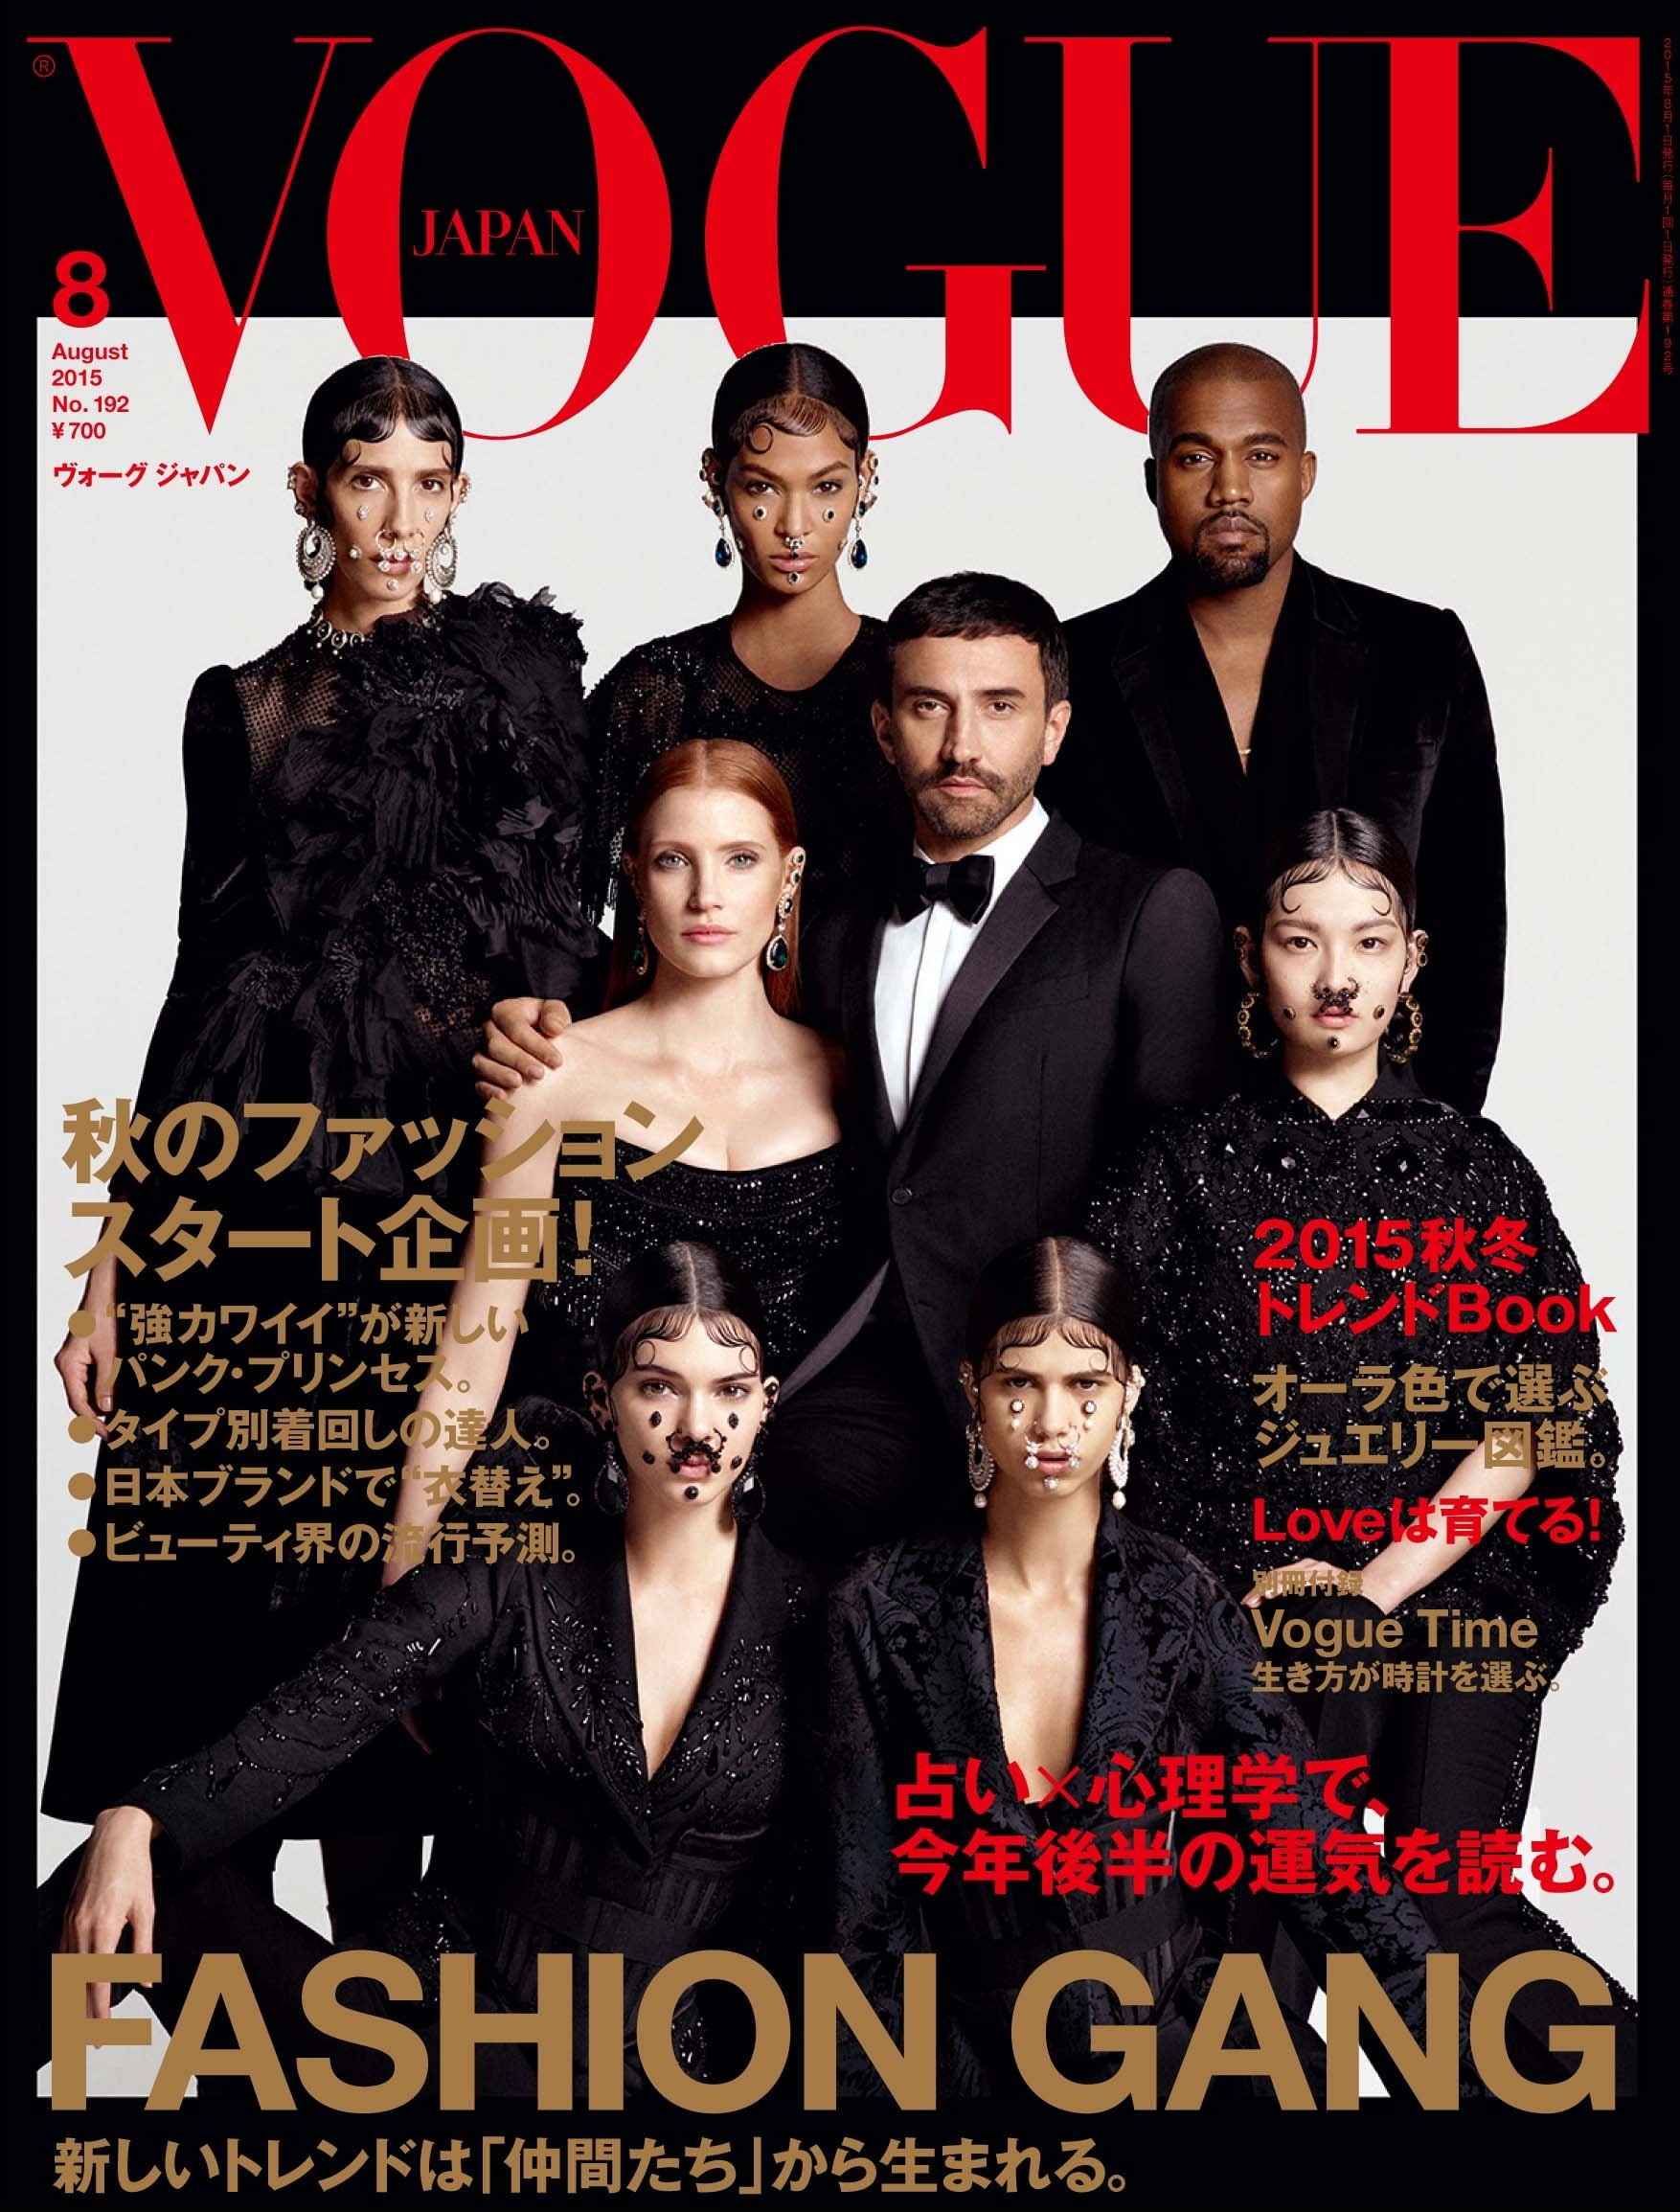 Kanye West, Riccardo Tisci + More Cover Vogue Japan in Givenchy